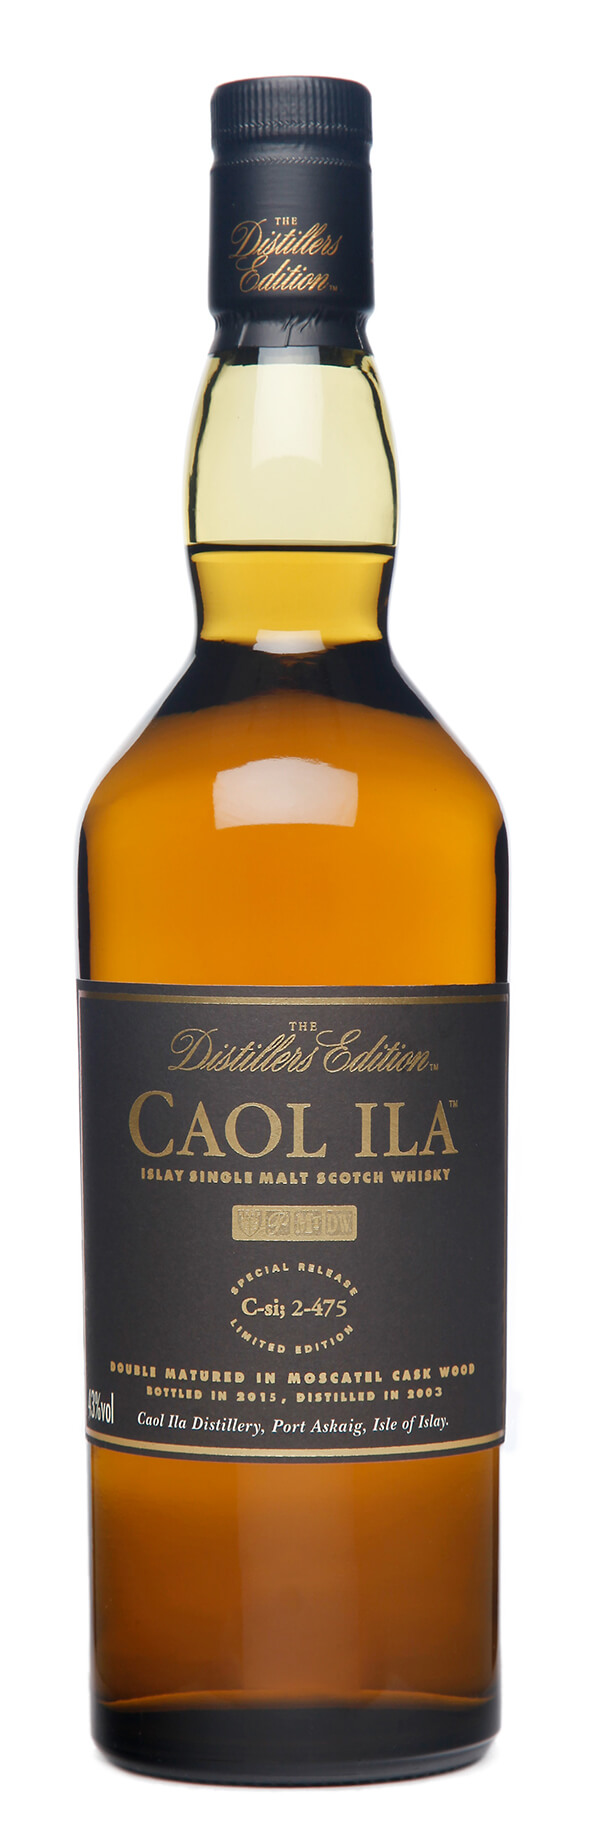 Caol Ila Distillers Edition 2003 2015 Whisky 43% 0,7L